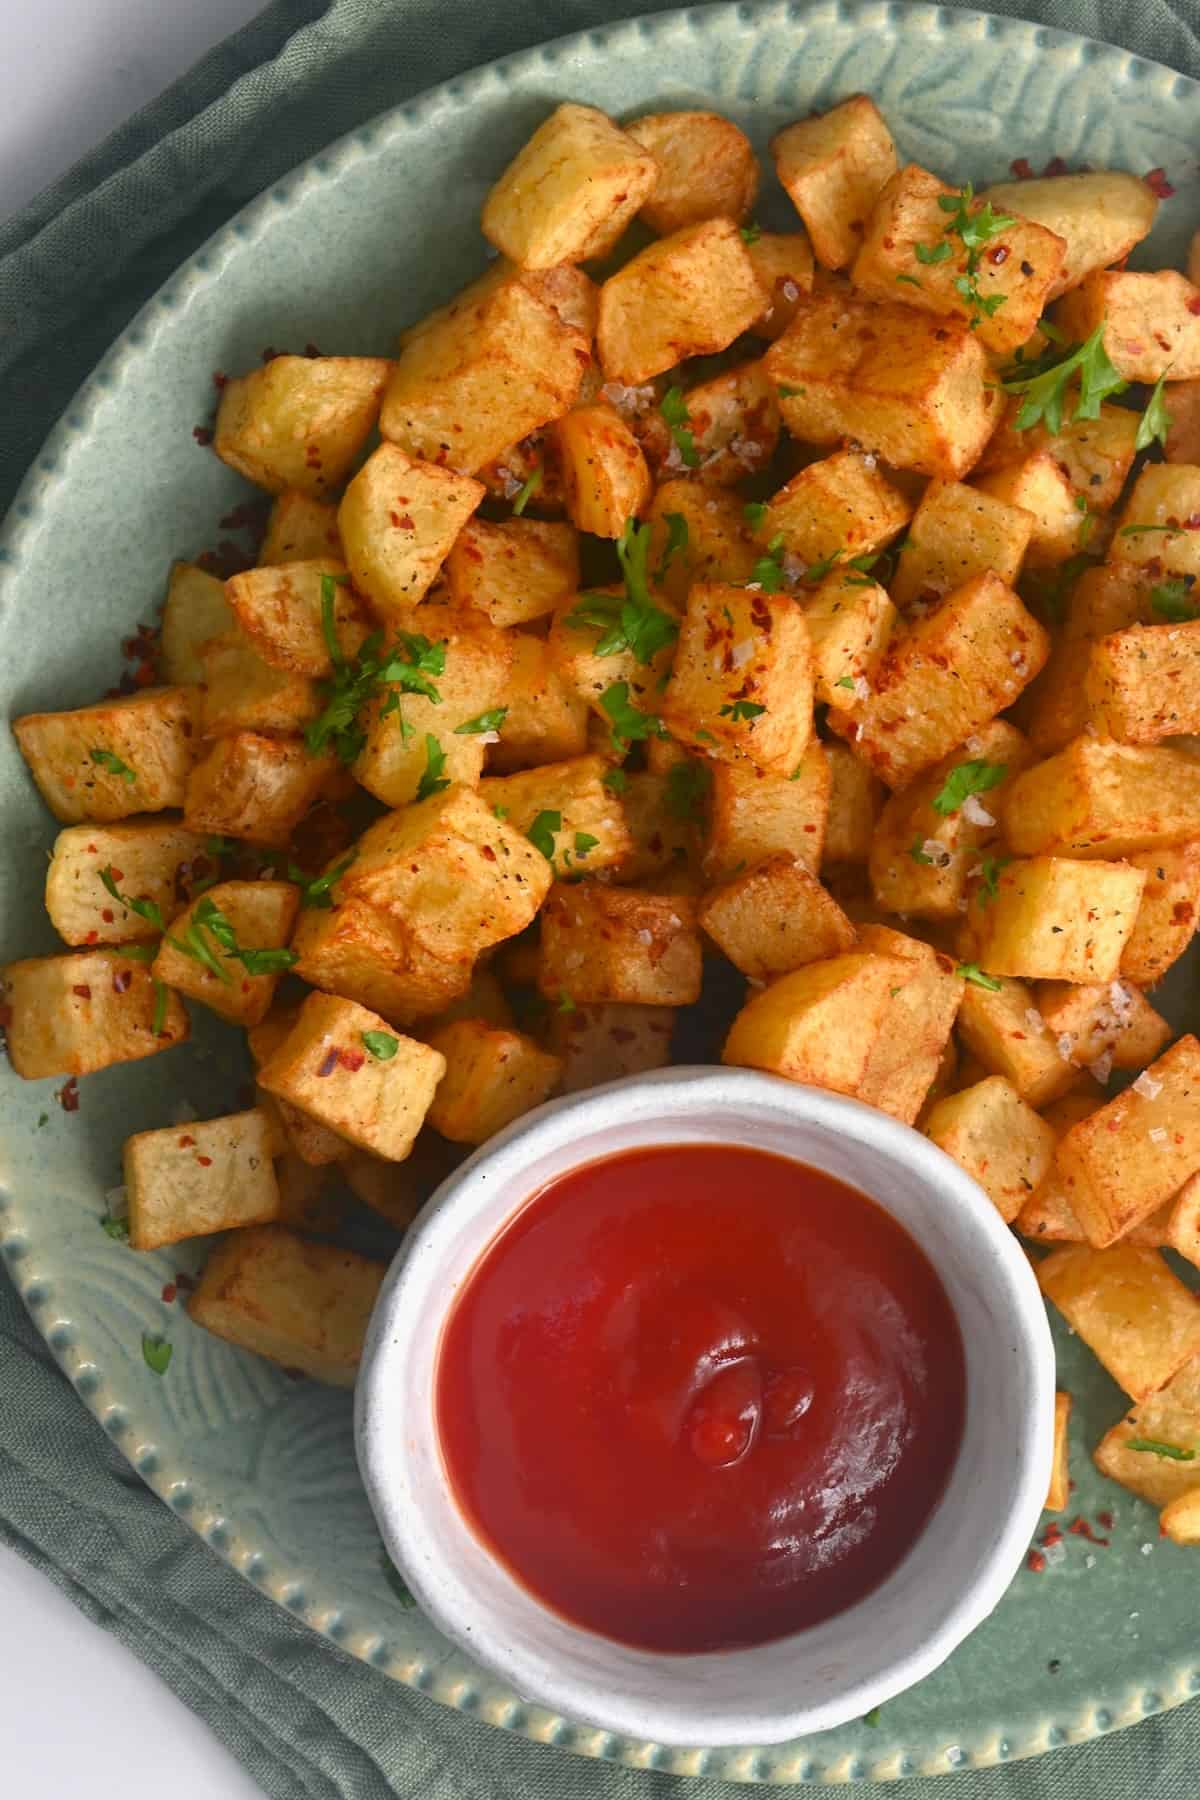 A serving of deep fried potatoes